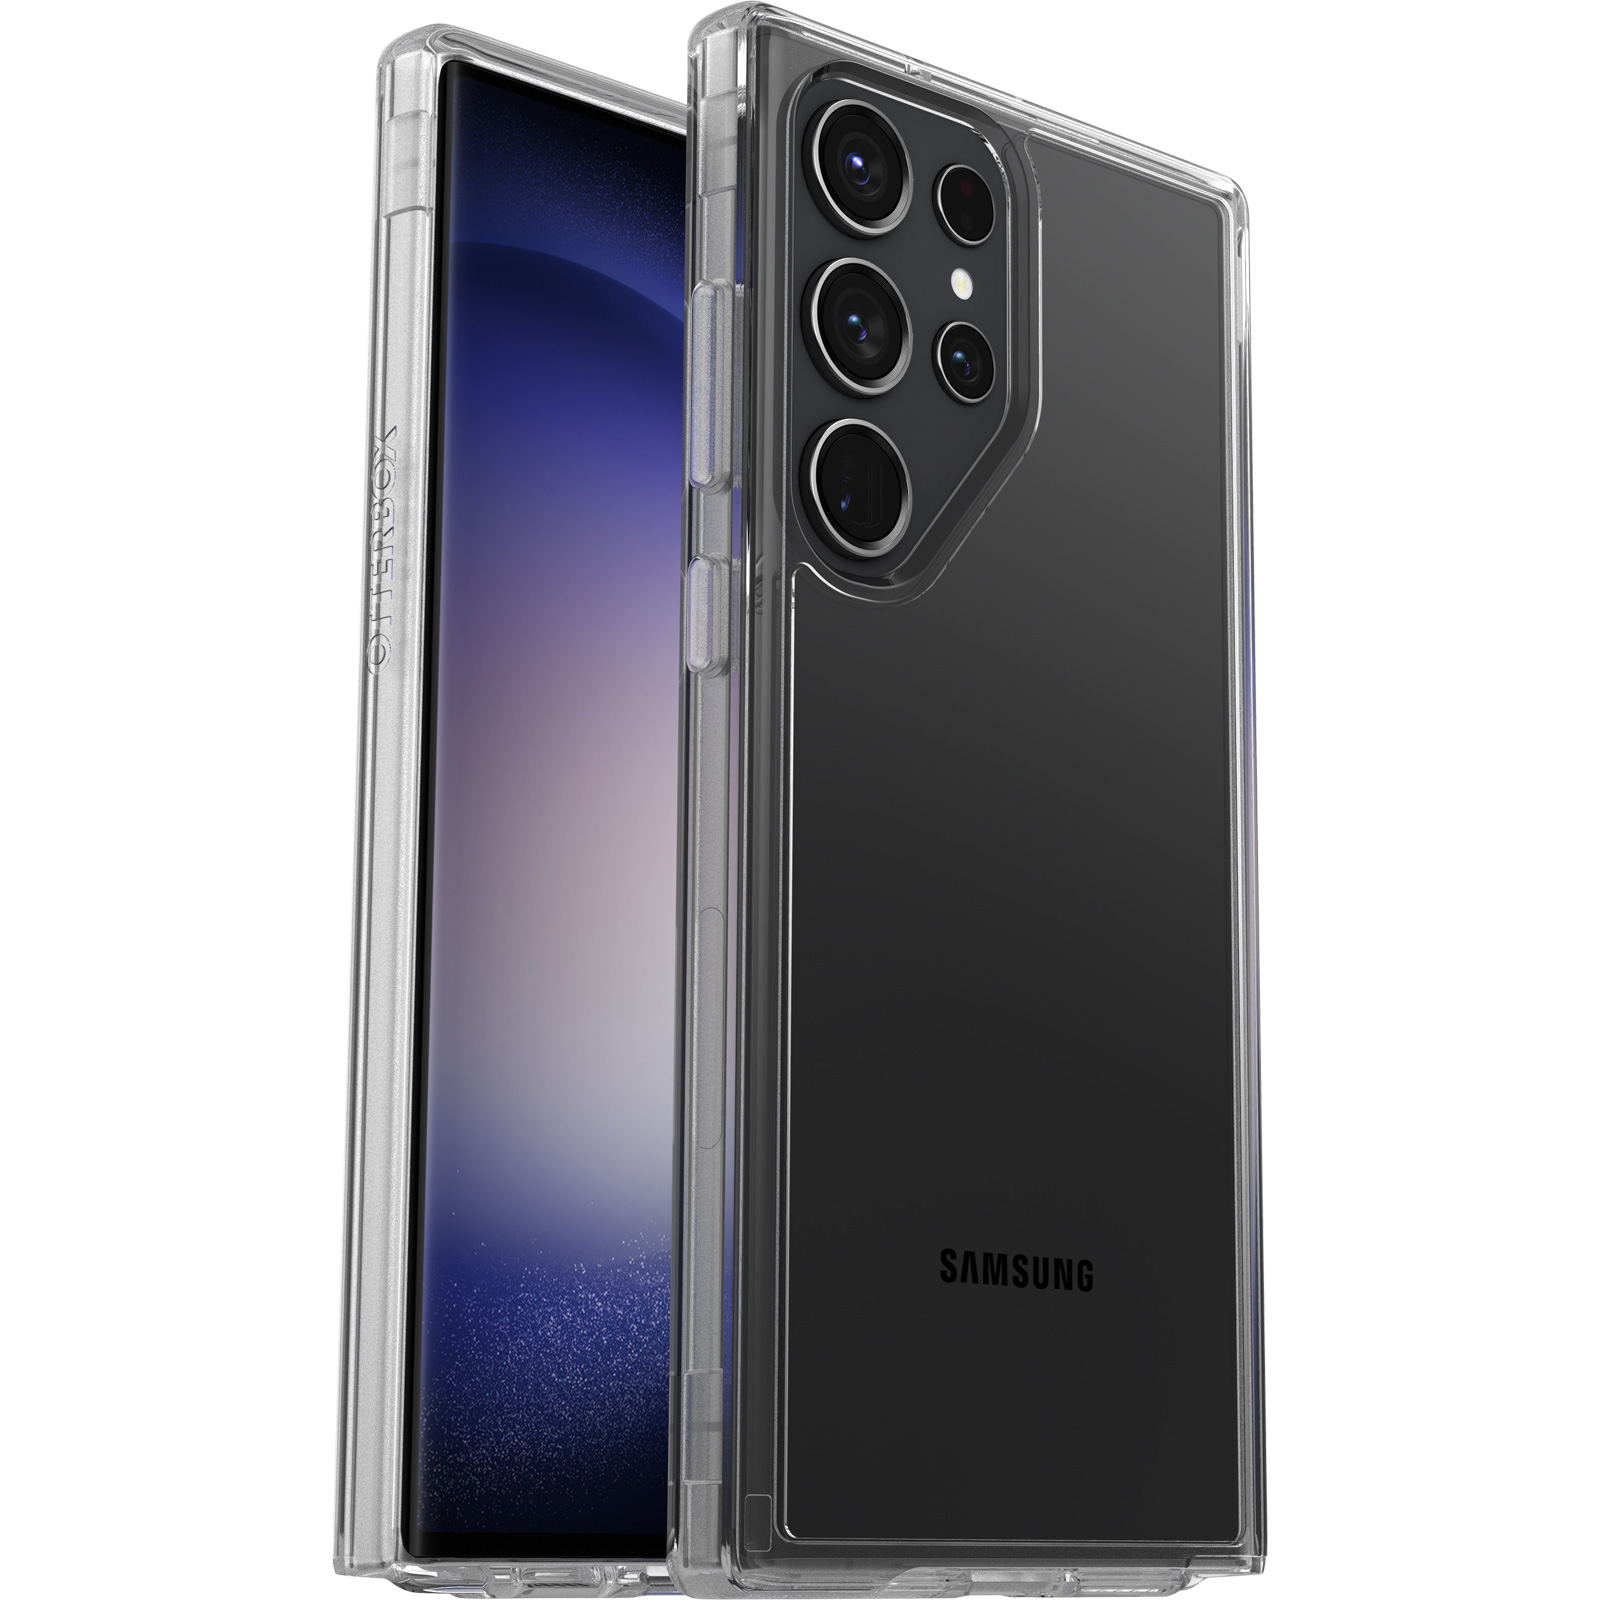 Funda Samsung Galaxy S22 S22+ Clear Standing Cover Original